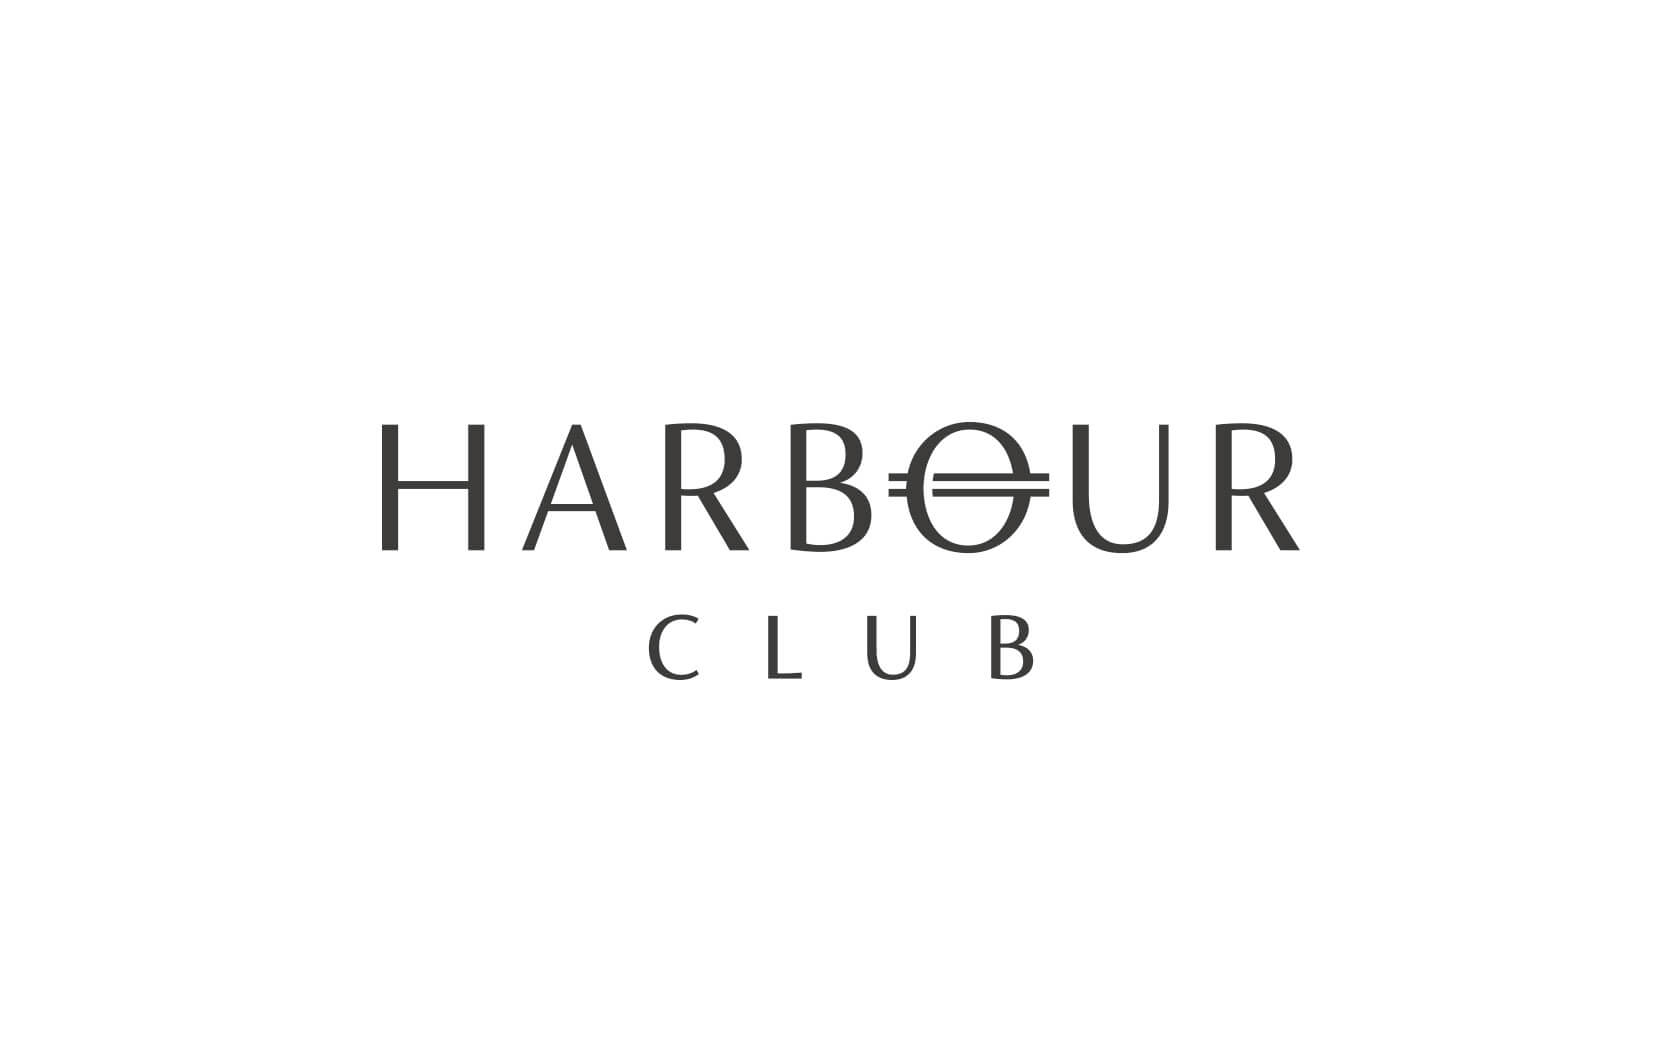 Harbour Club. Brand logo in black